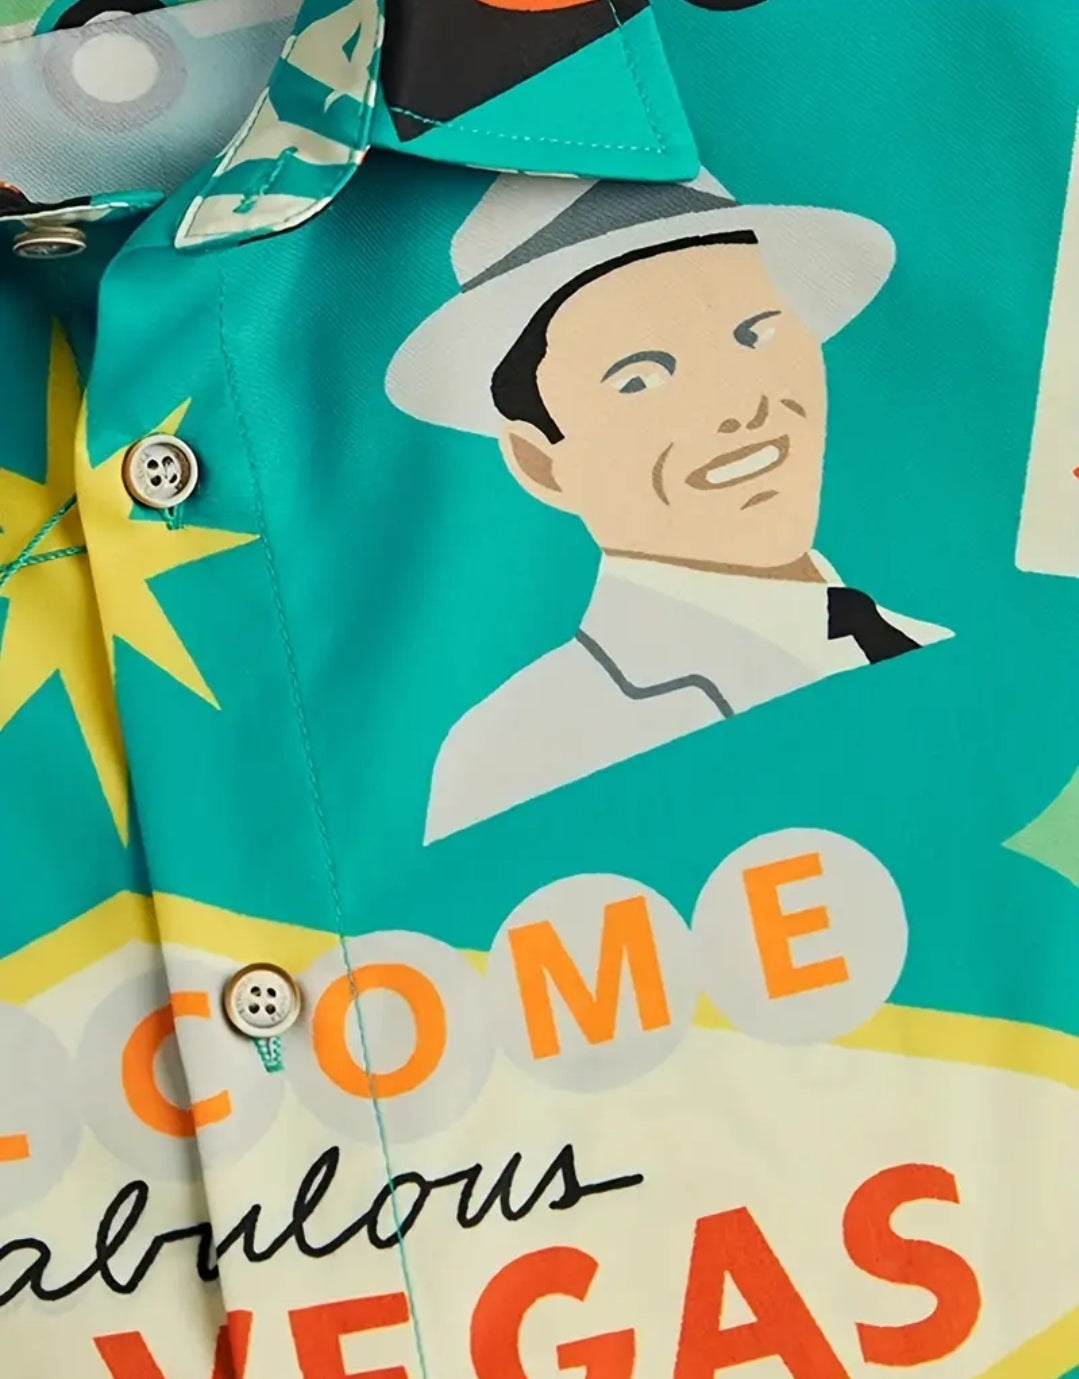 Retro Las Vegas Frank Sinatra Button Up Shirt